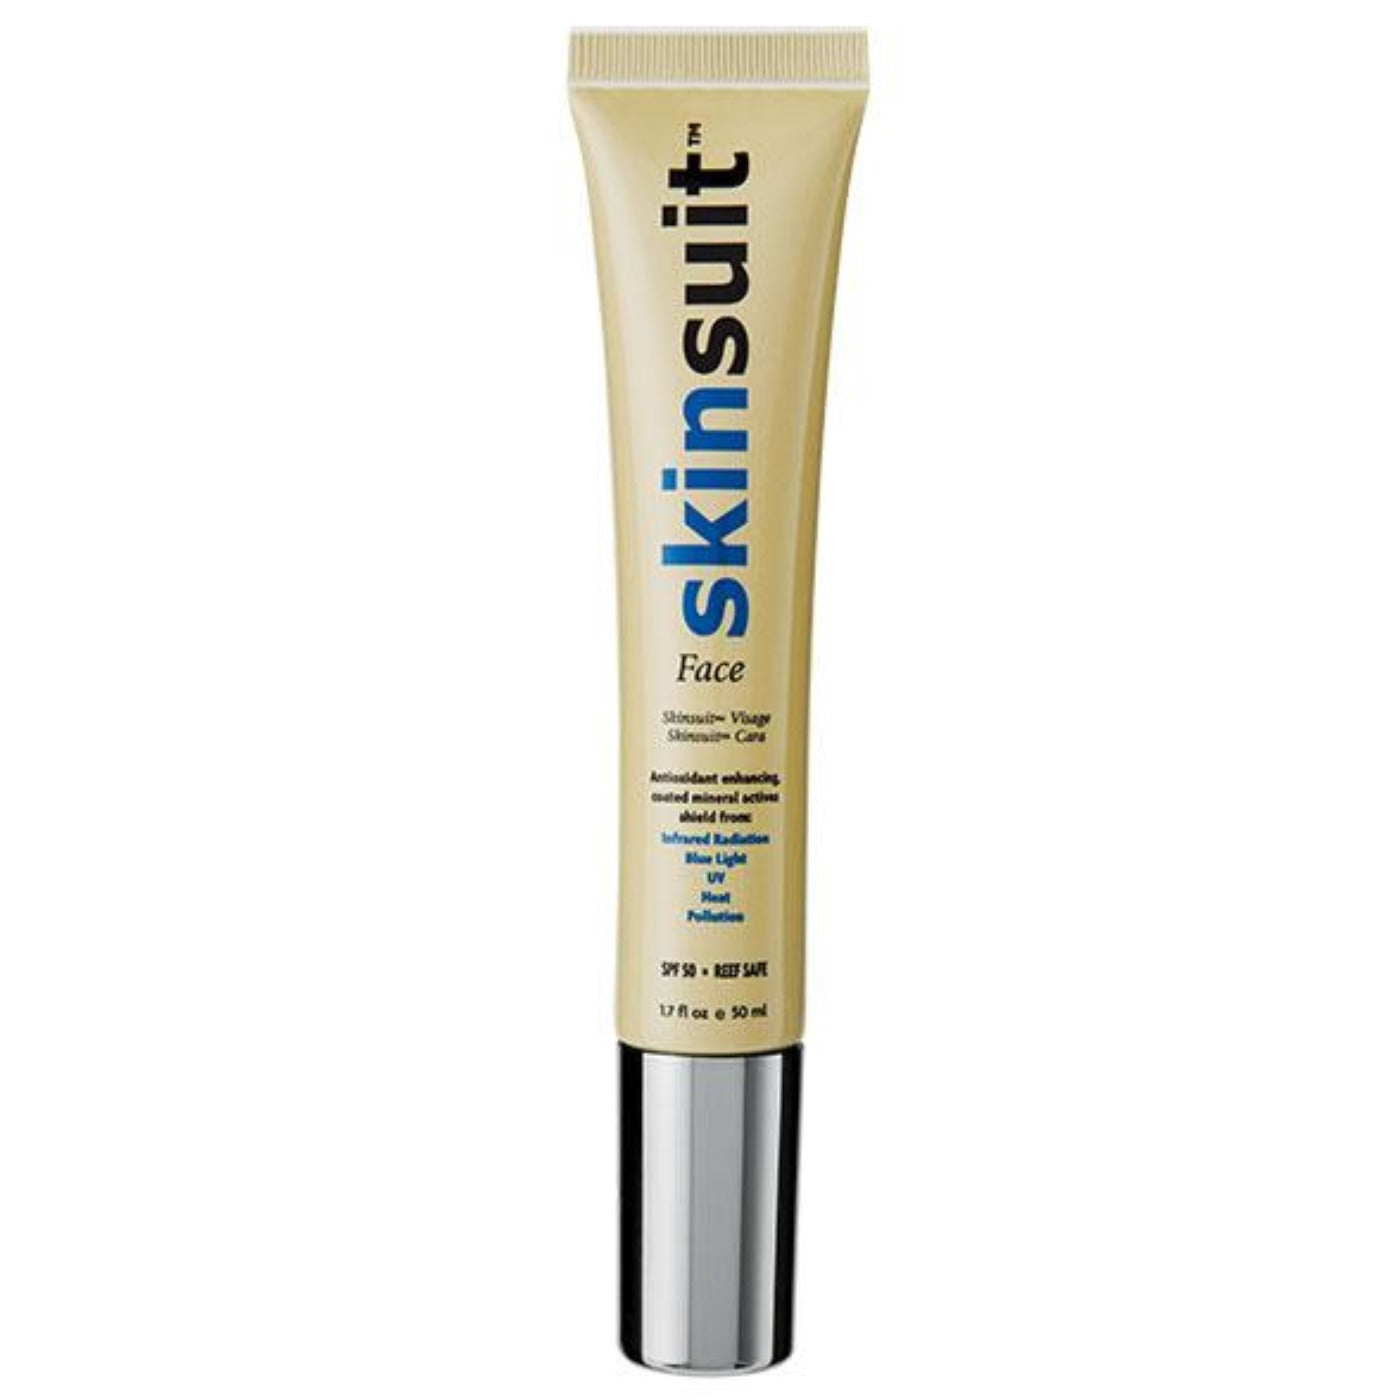 SkinSuit Face SPF 50 | Skin Authority